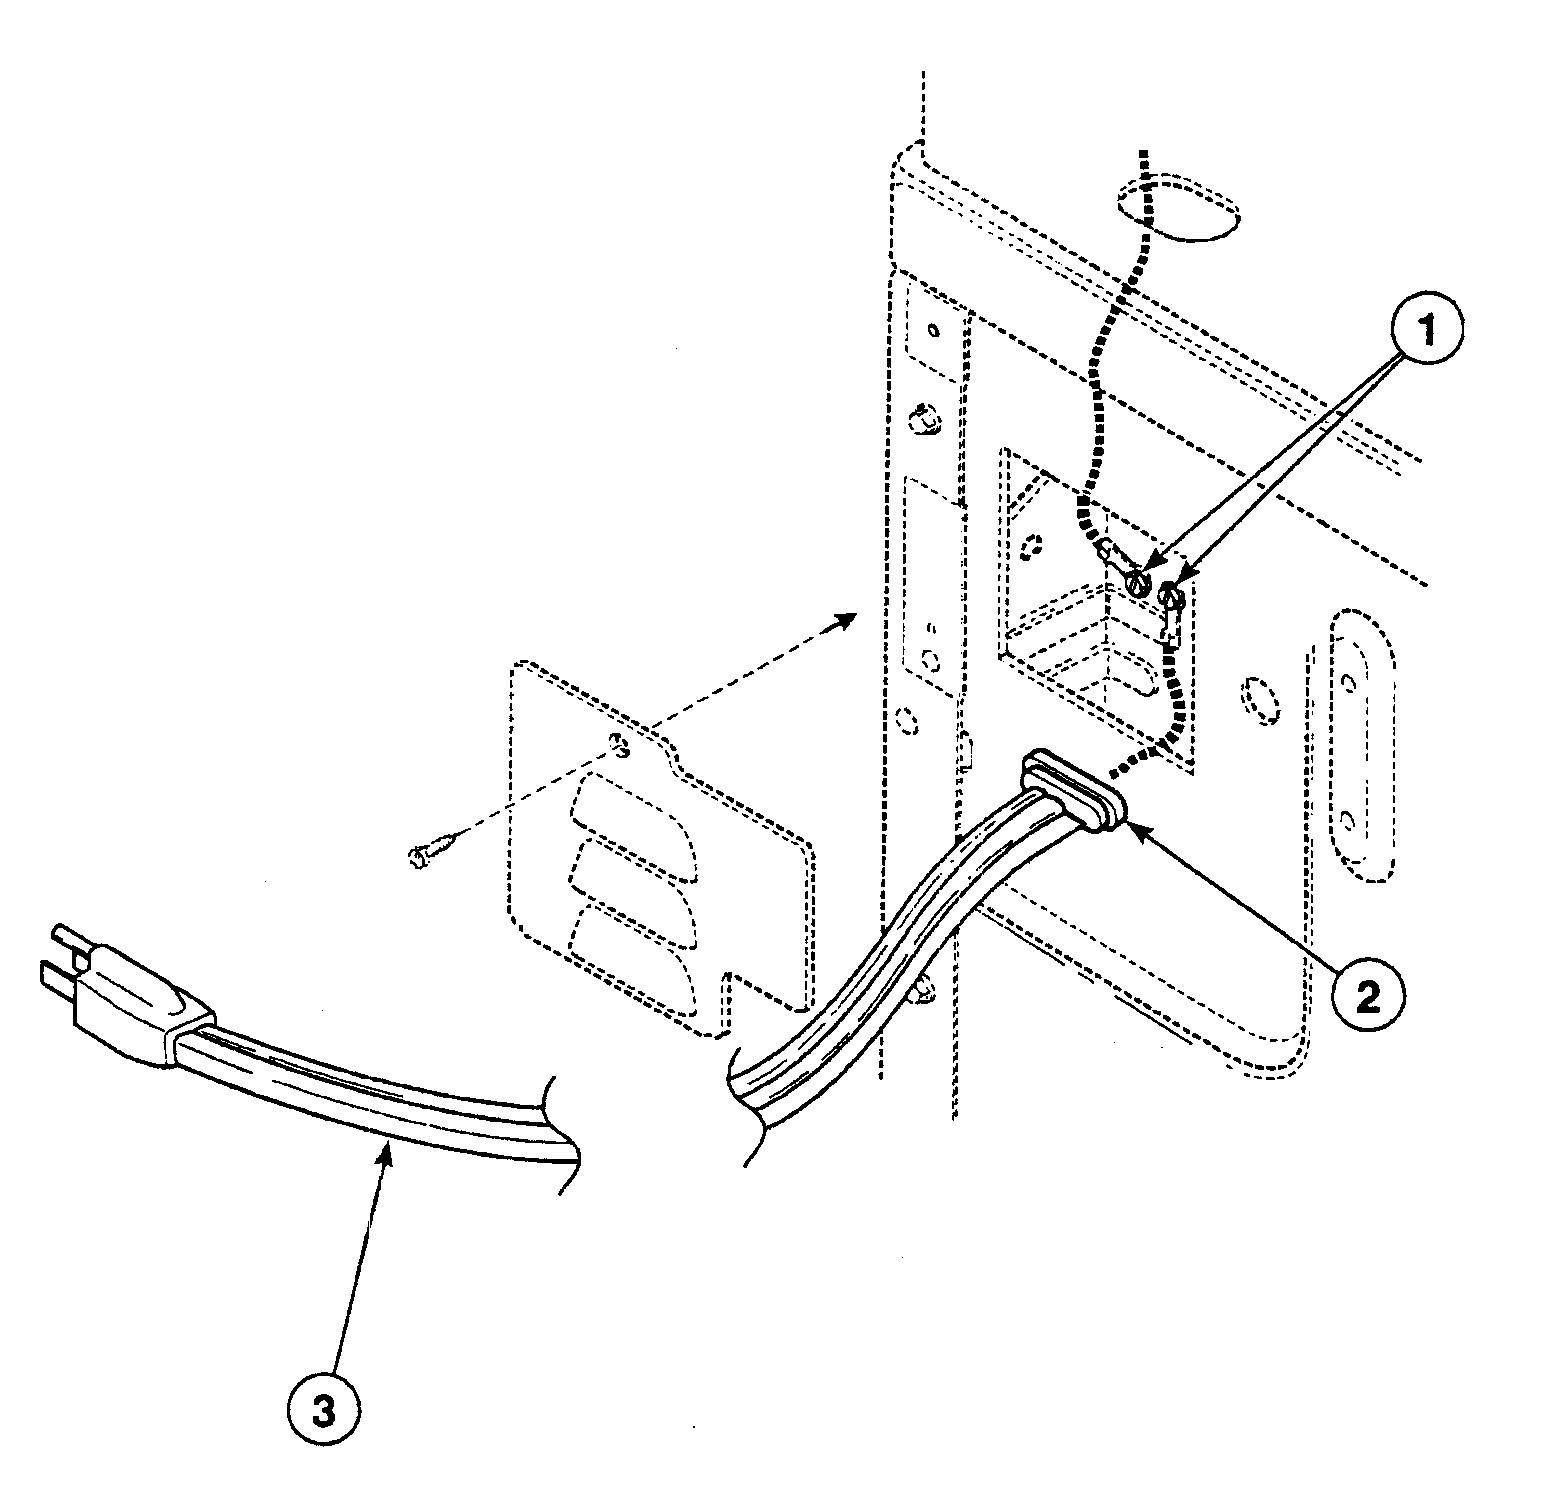 Speed Queen Dryer Wiring Diagram